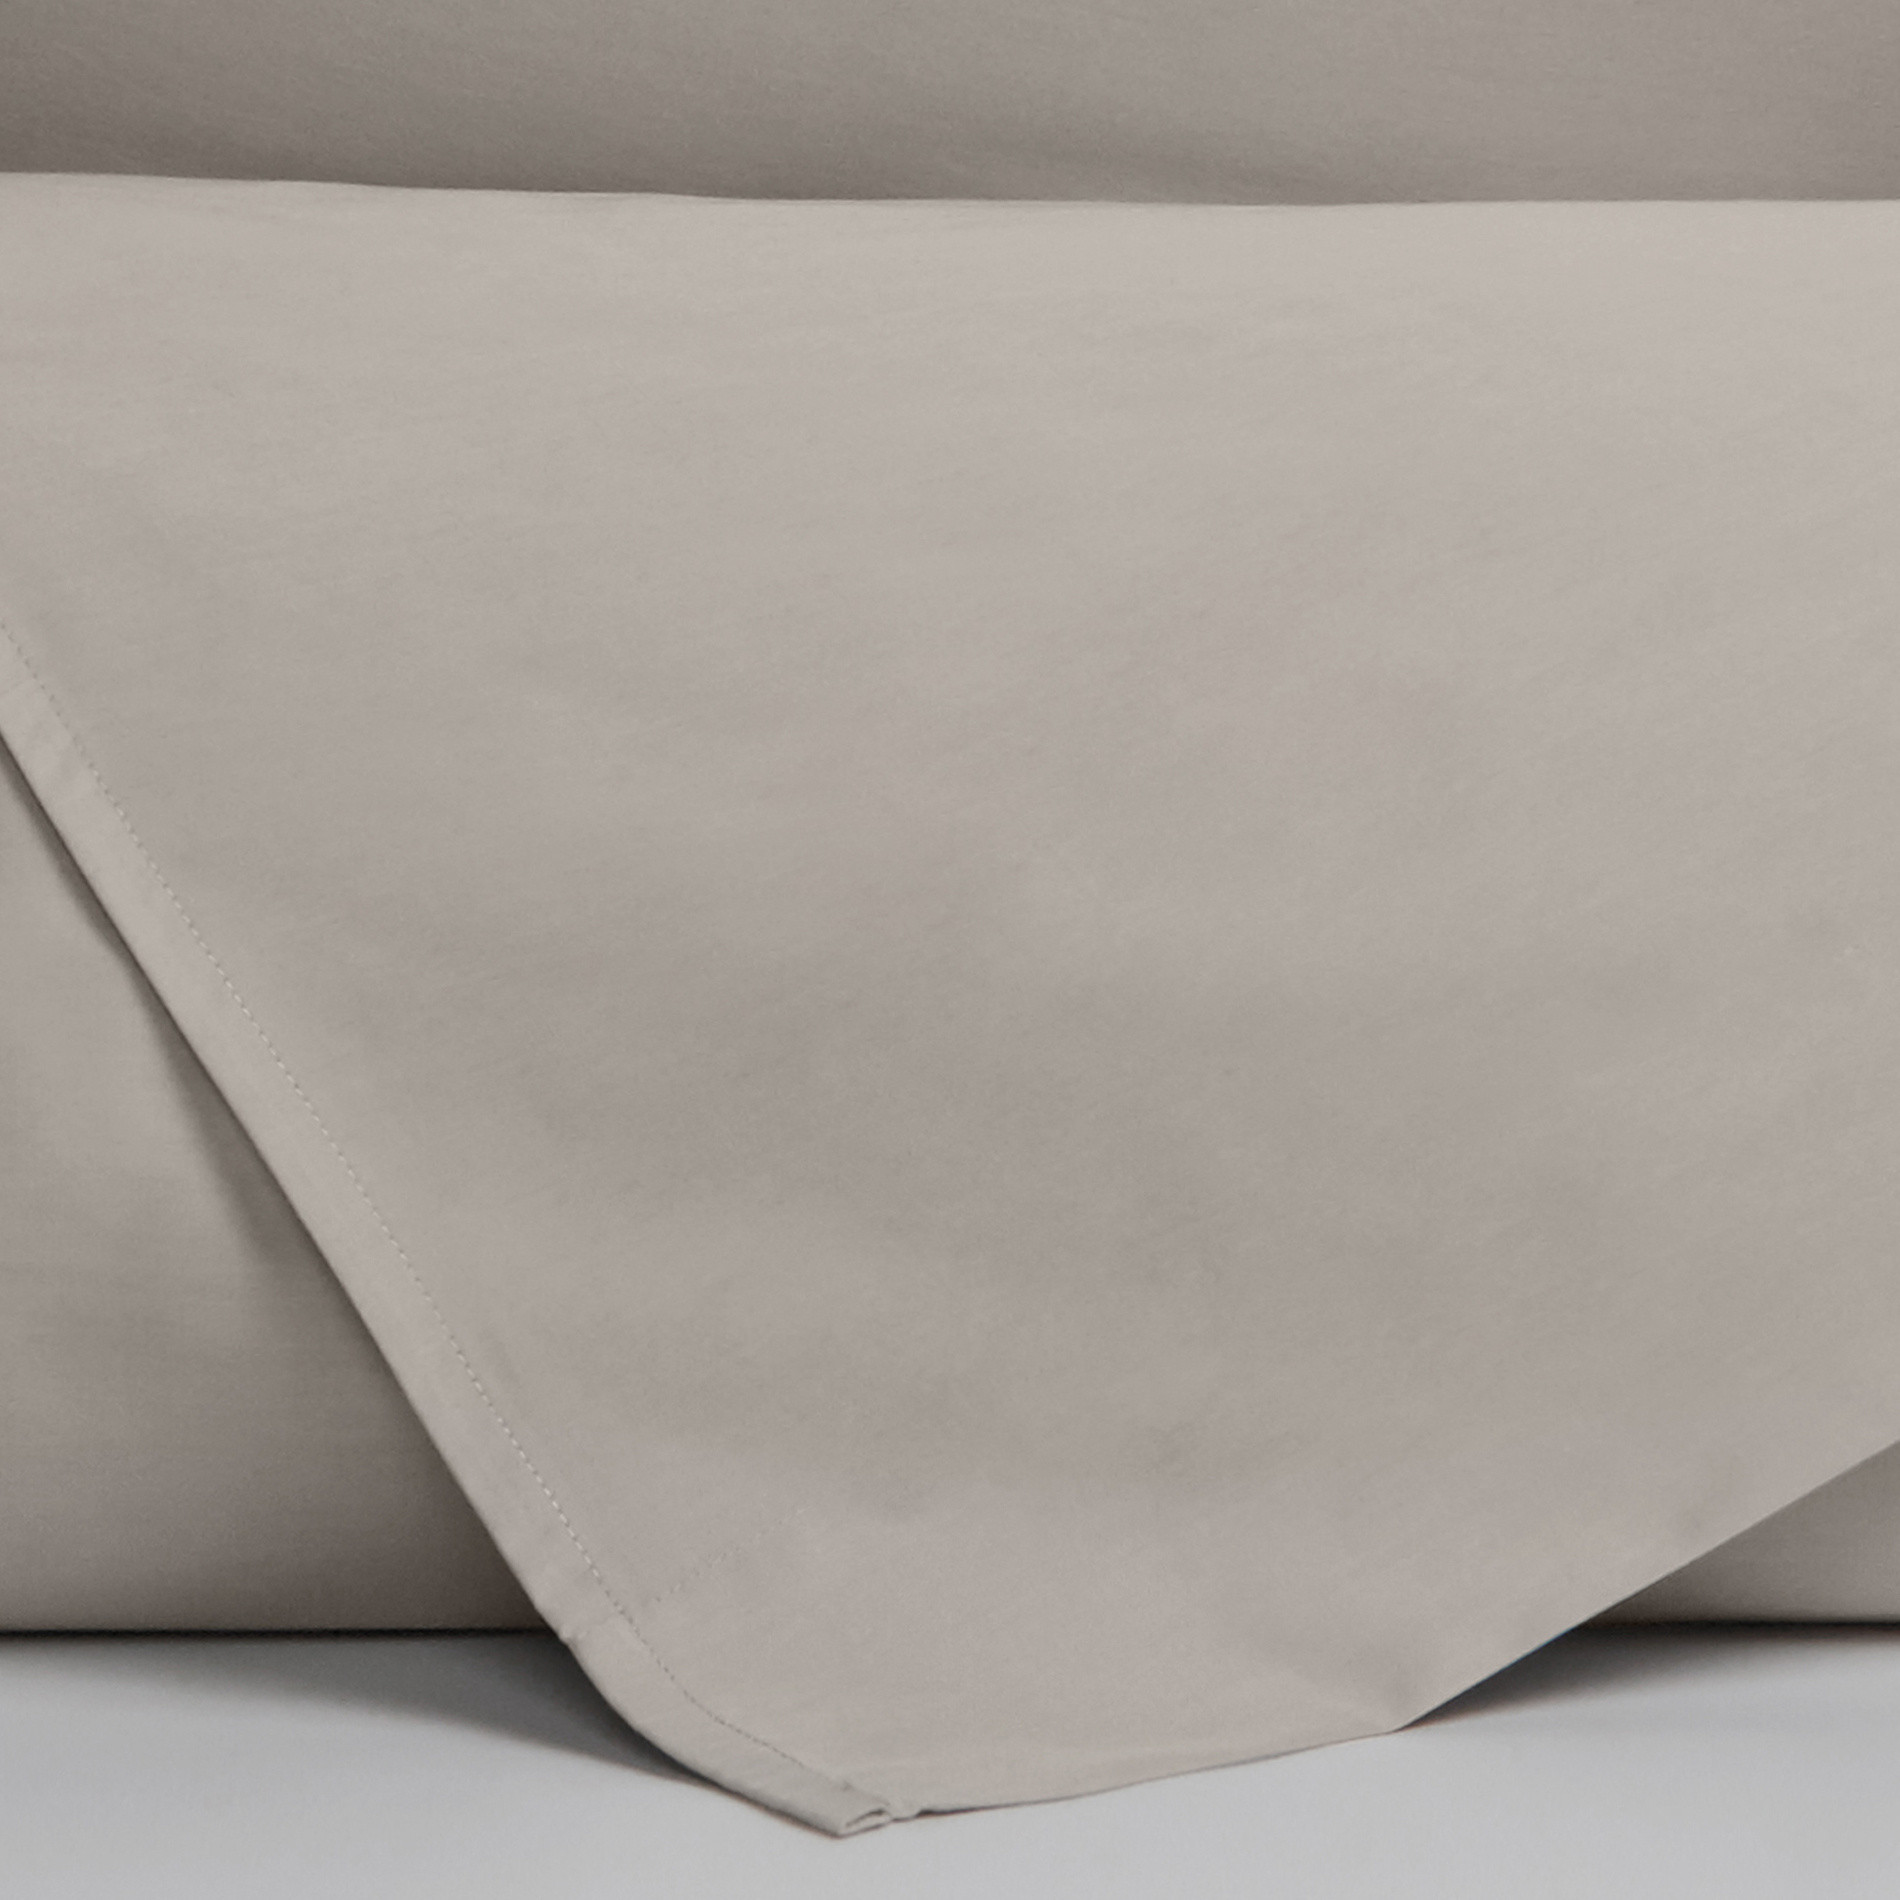 Zefiro duvet cover set in 100% cotton satin, Dark Beige, large image number 2